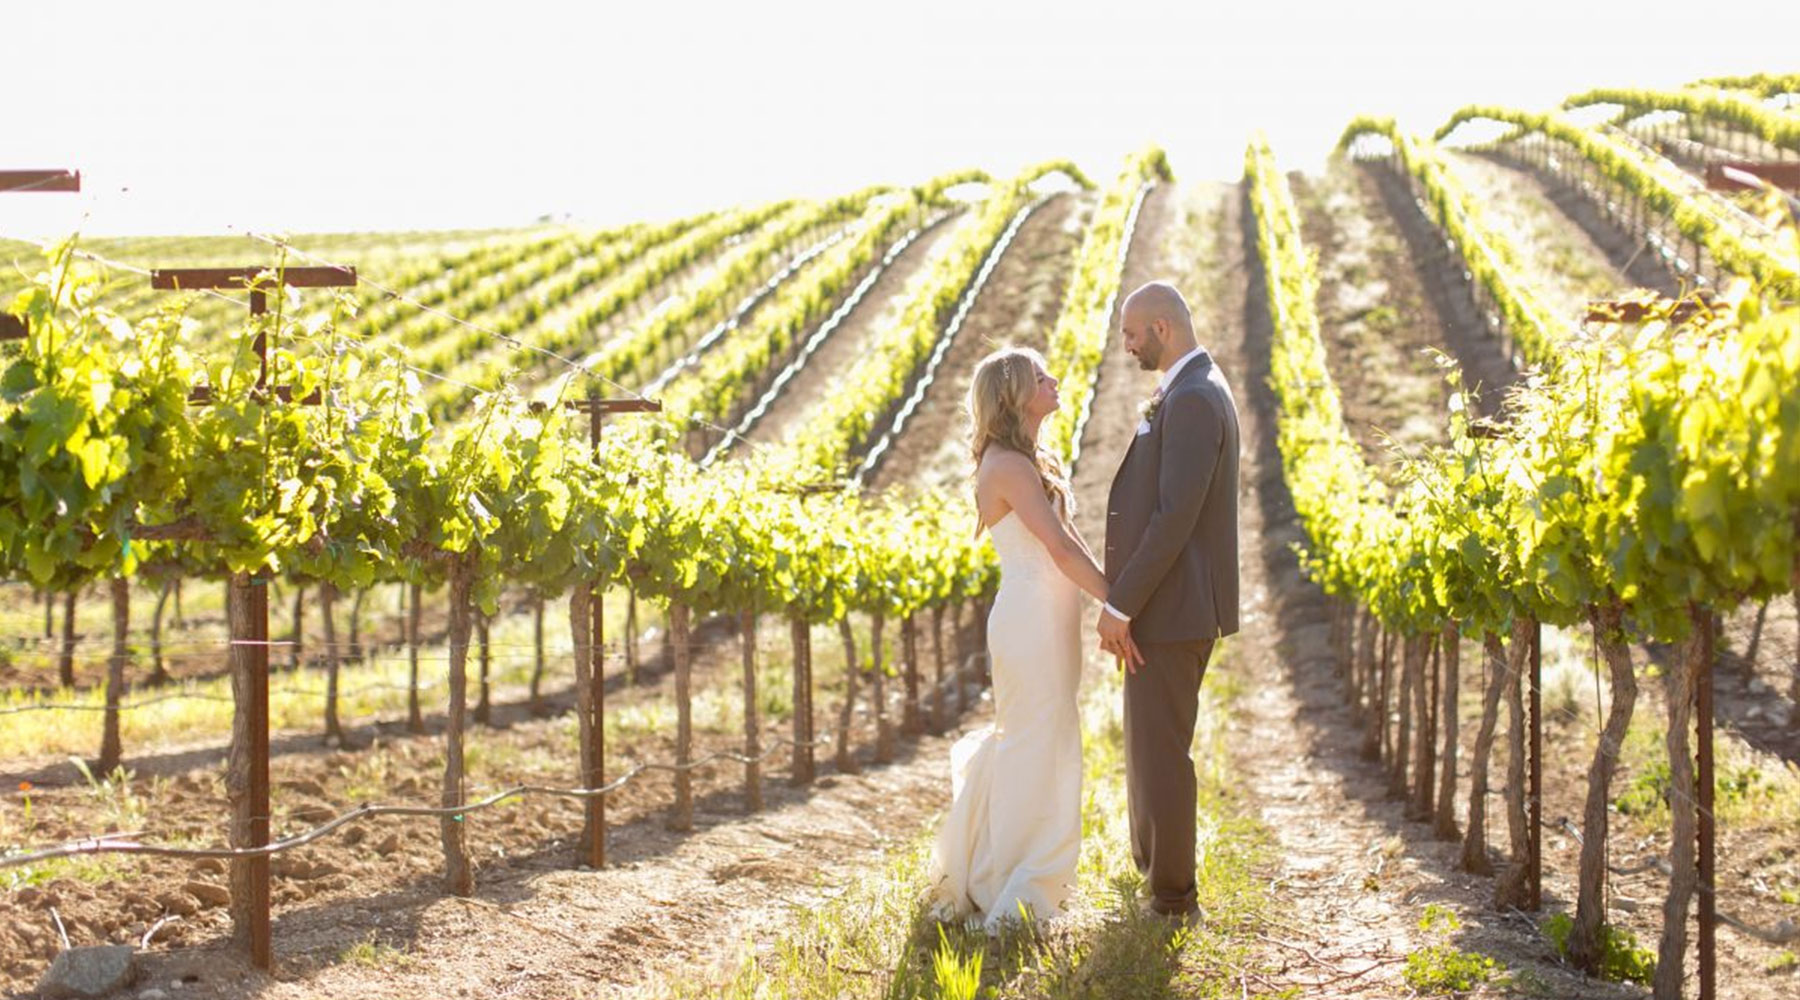 Villa San-Juliette Paso Robles Winery Vineyard Wedding